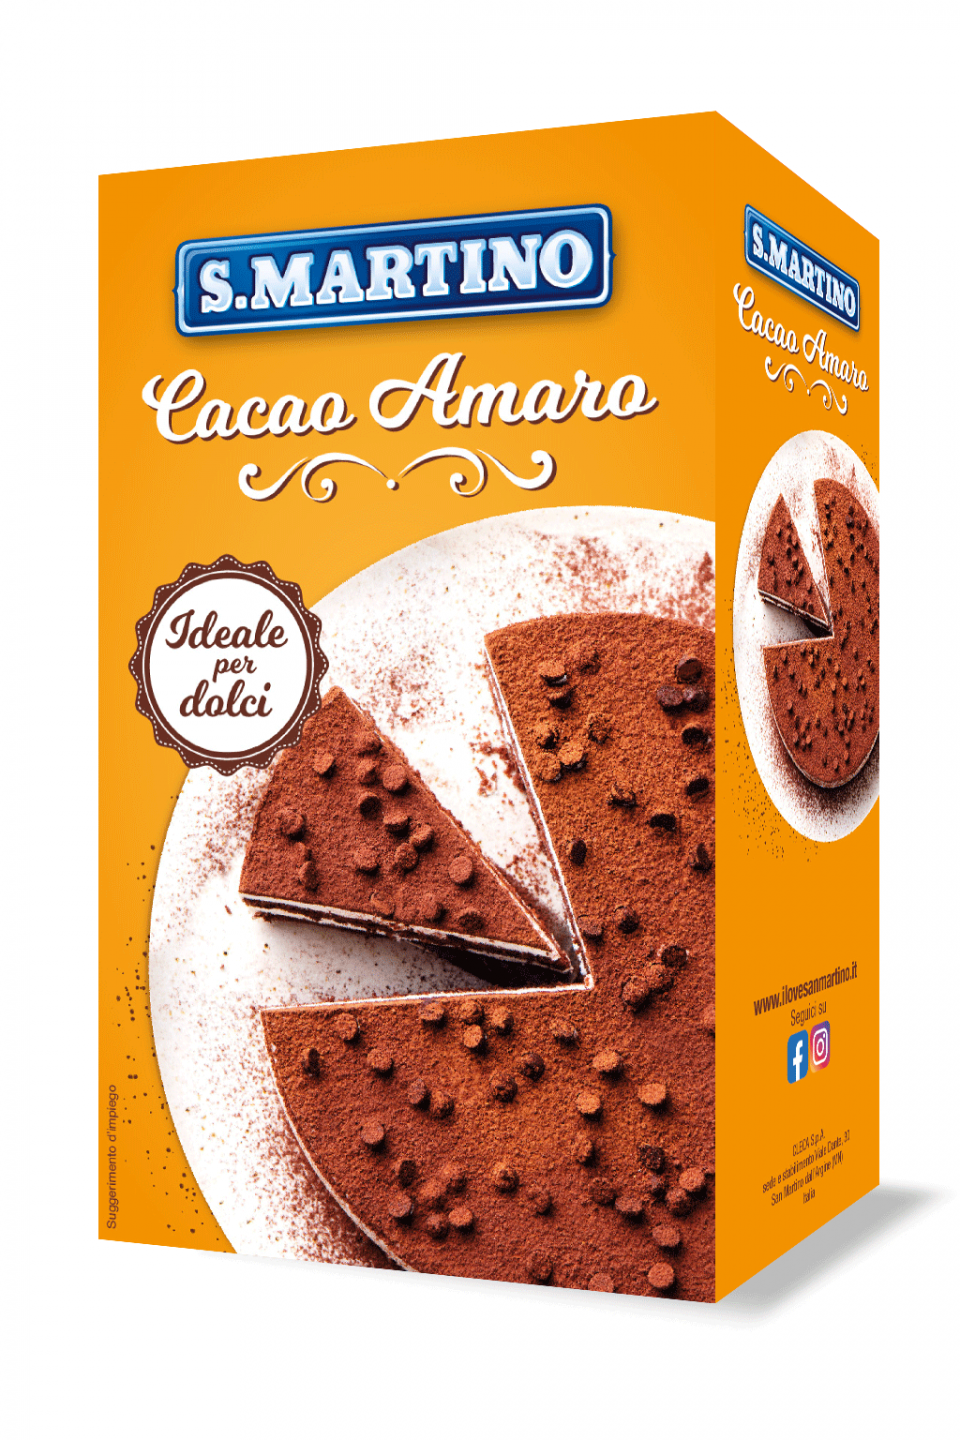 S.MARTINO Cacao Amaro 250g